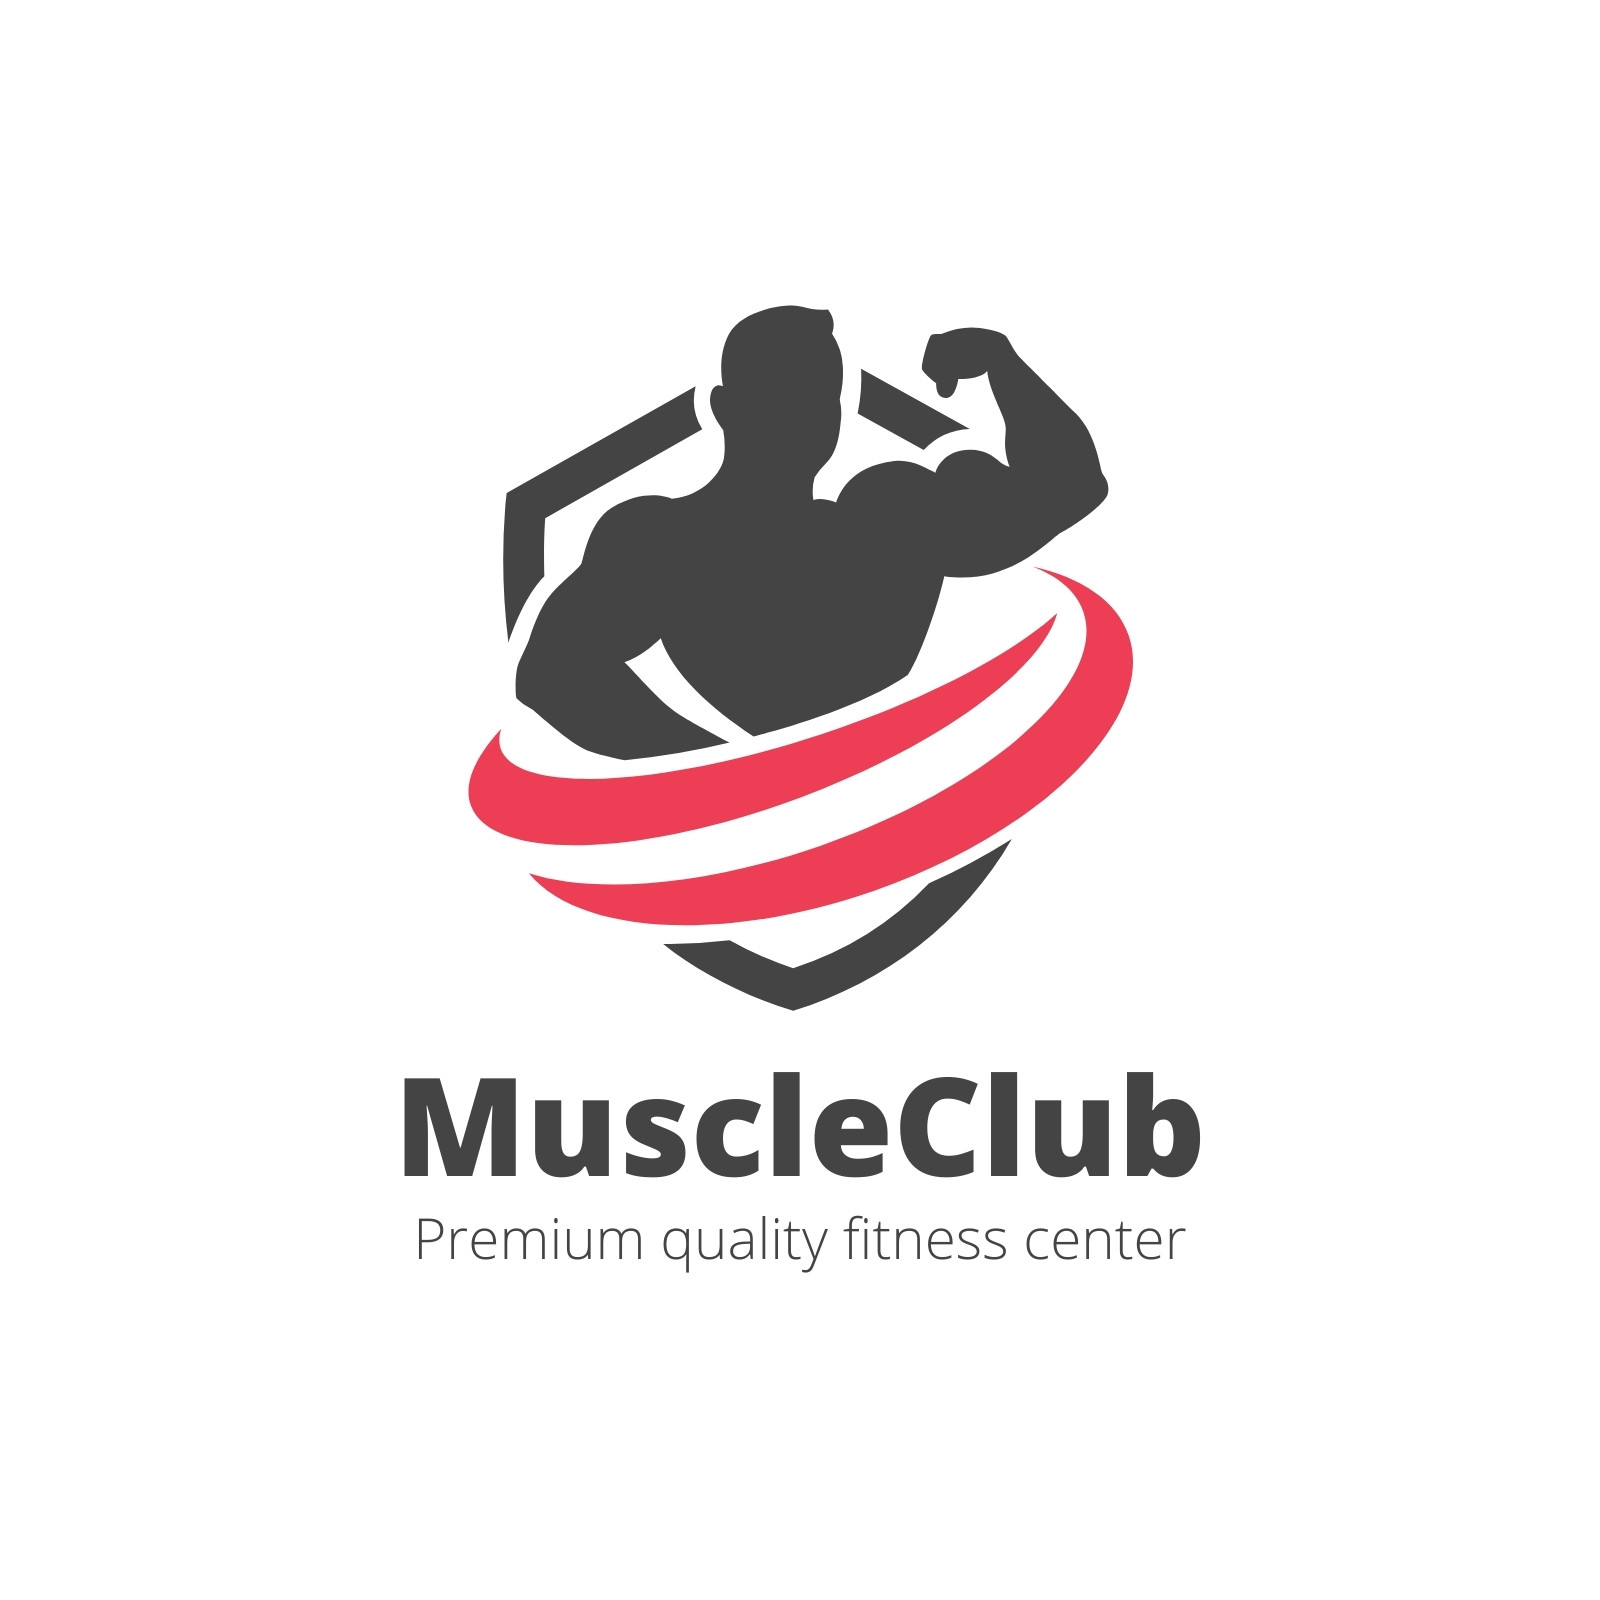 Free custom printable gym logo templates | Canva